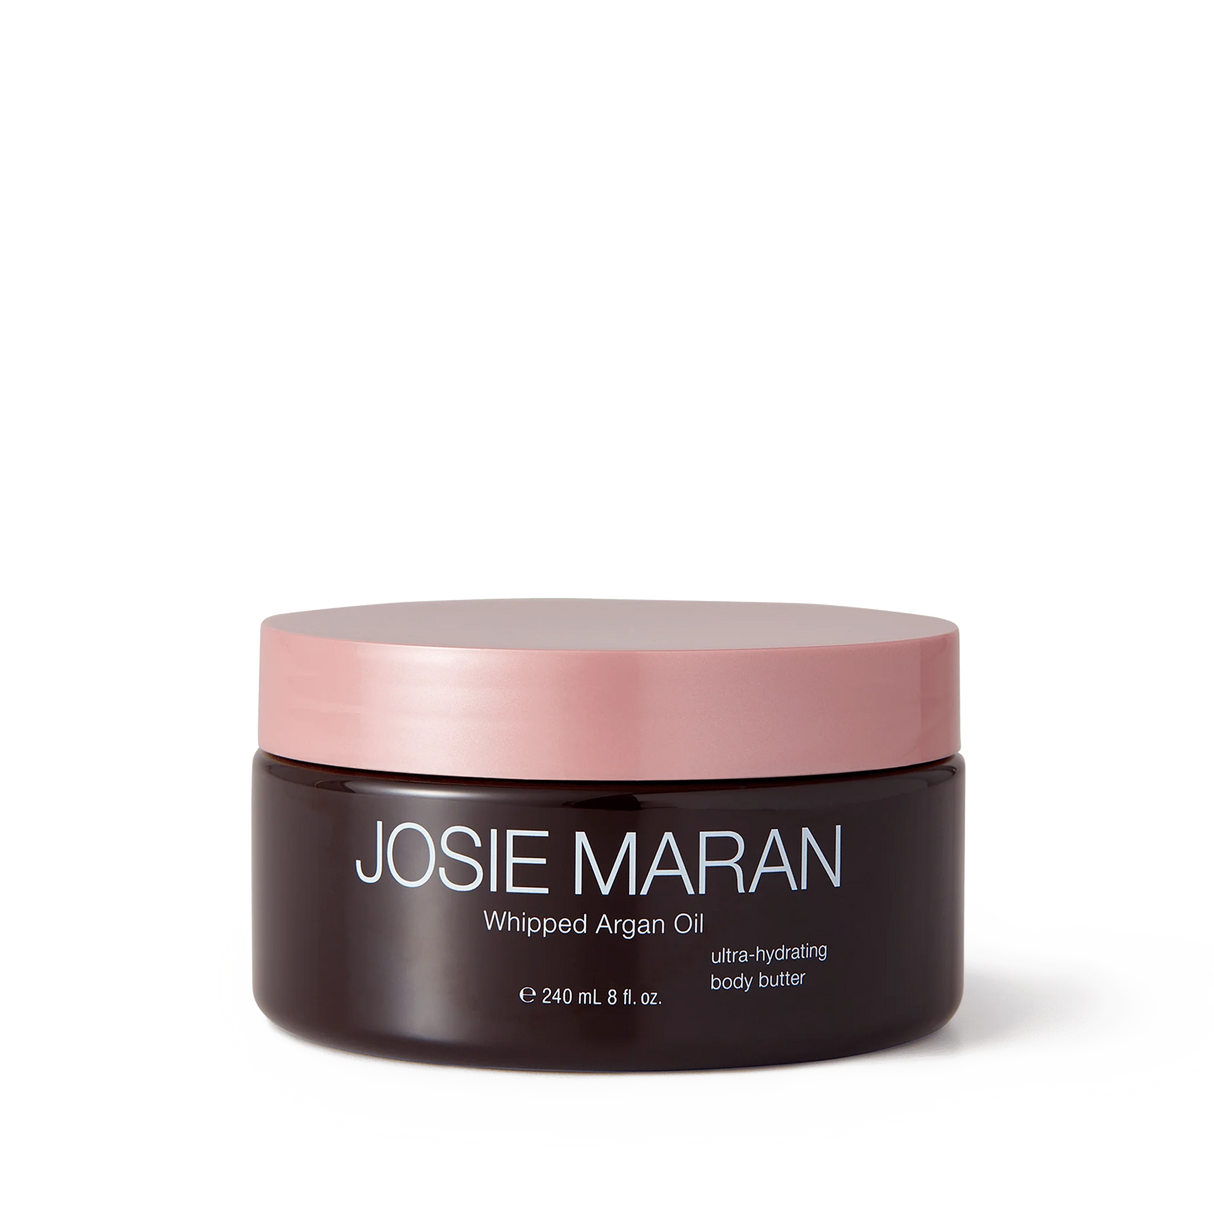 Josie Maran Whipped Argan Oil Body Butter Vanilla Almond - Limited Edition (8 fl. oz.)